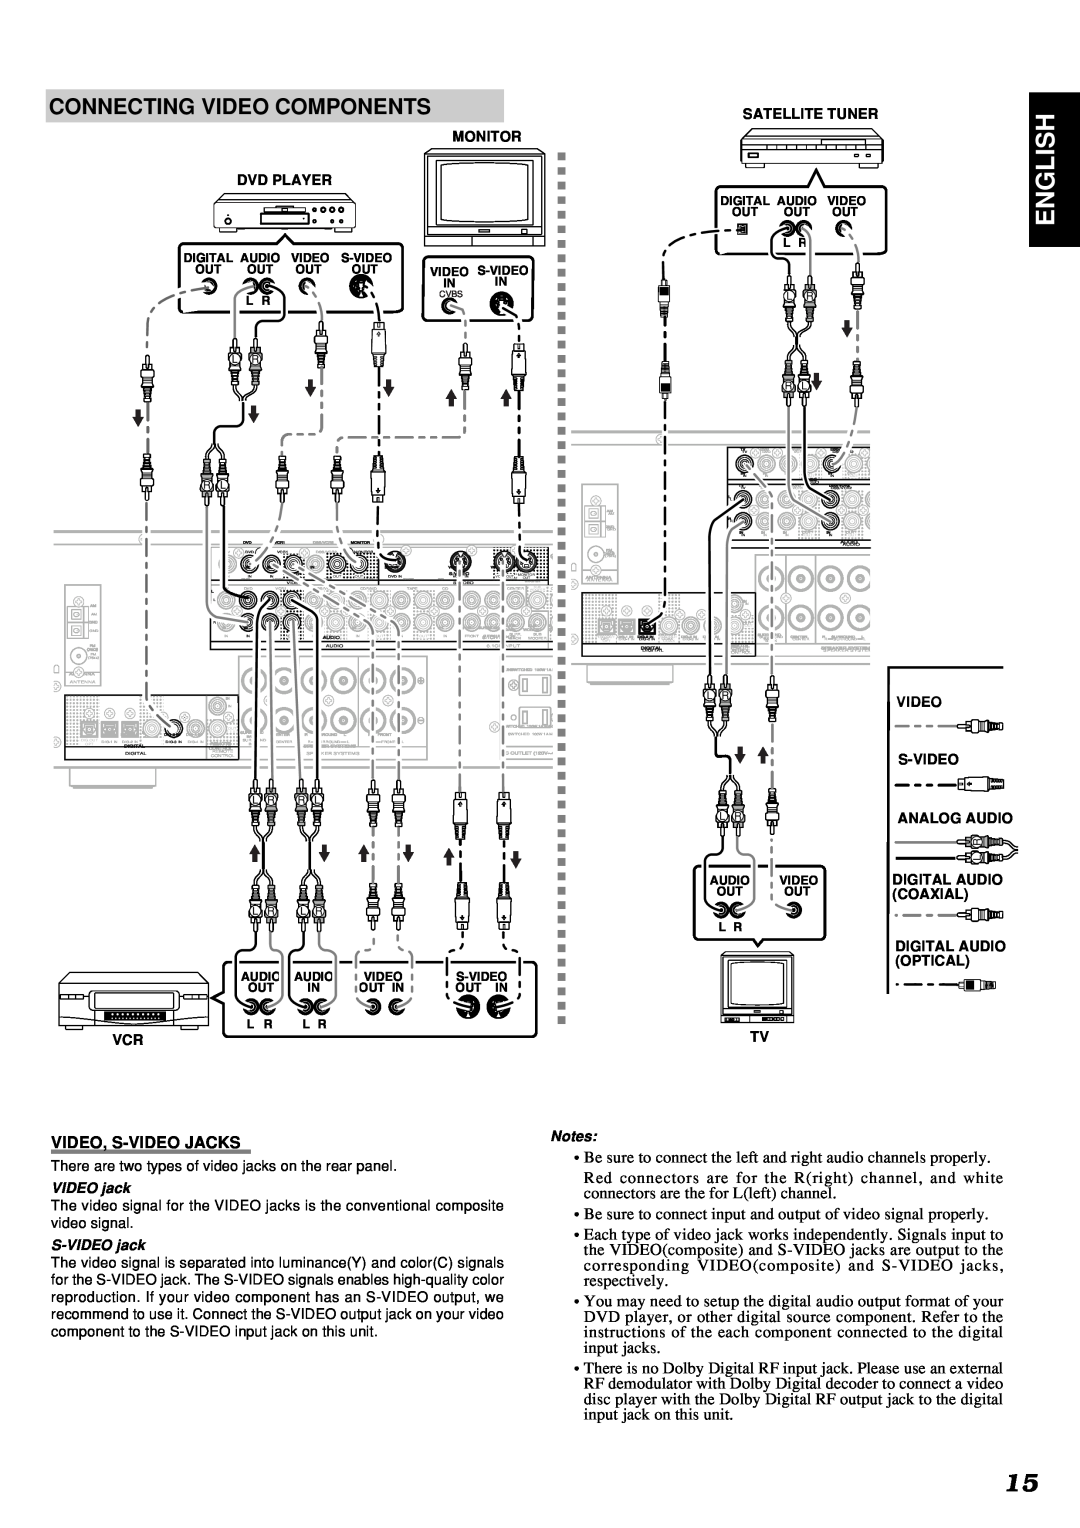 Marantz SR4300 manual English, Connecting Video Components, Video, S-Videojacks 